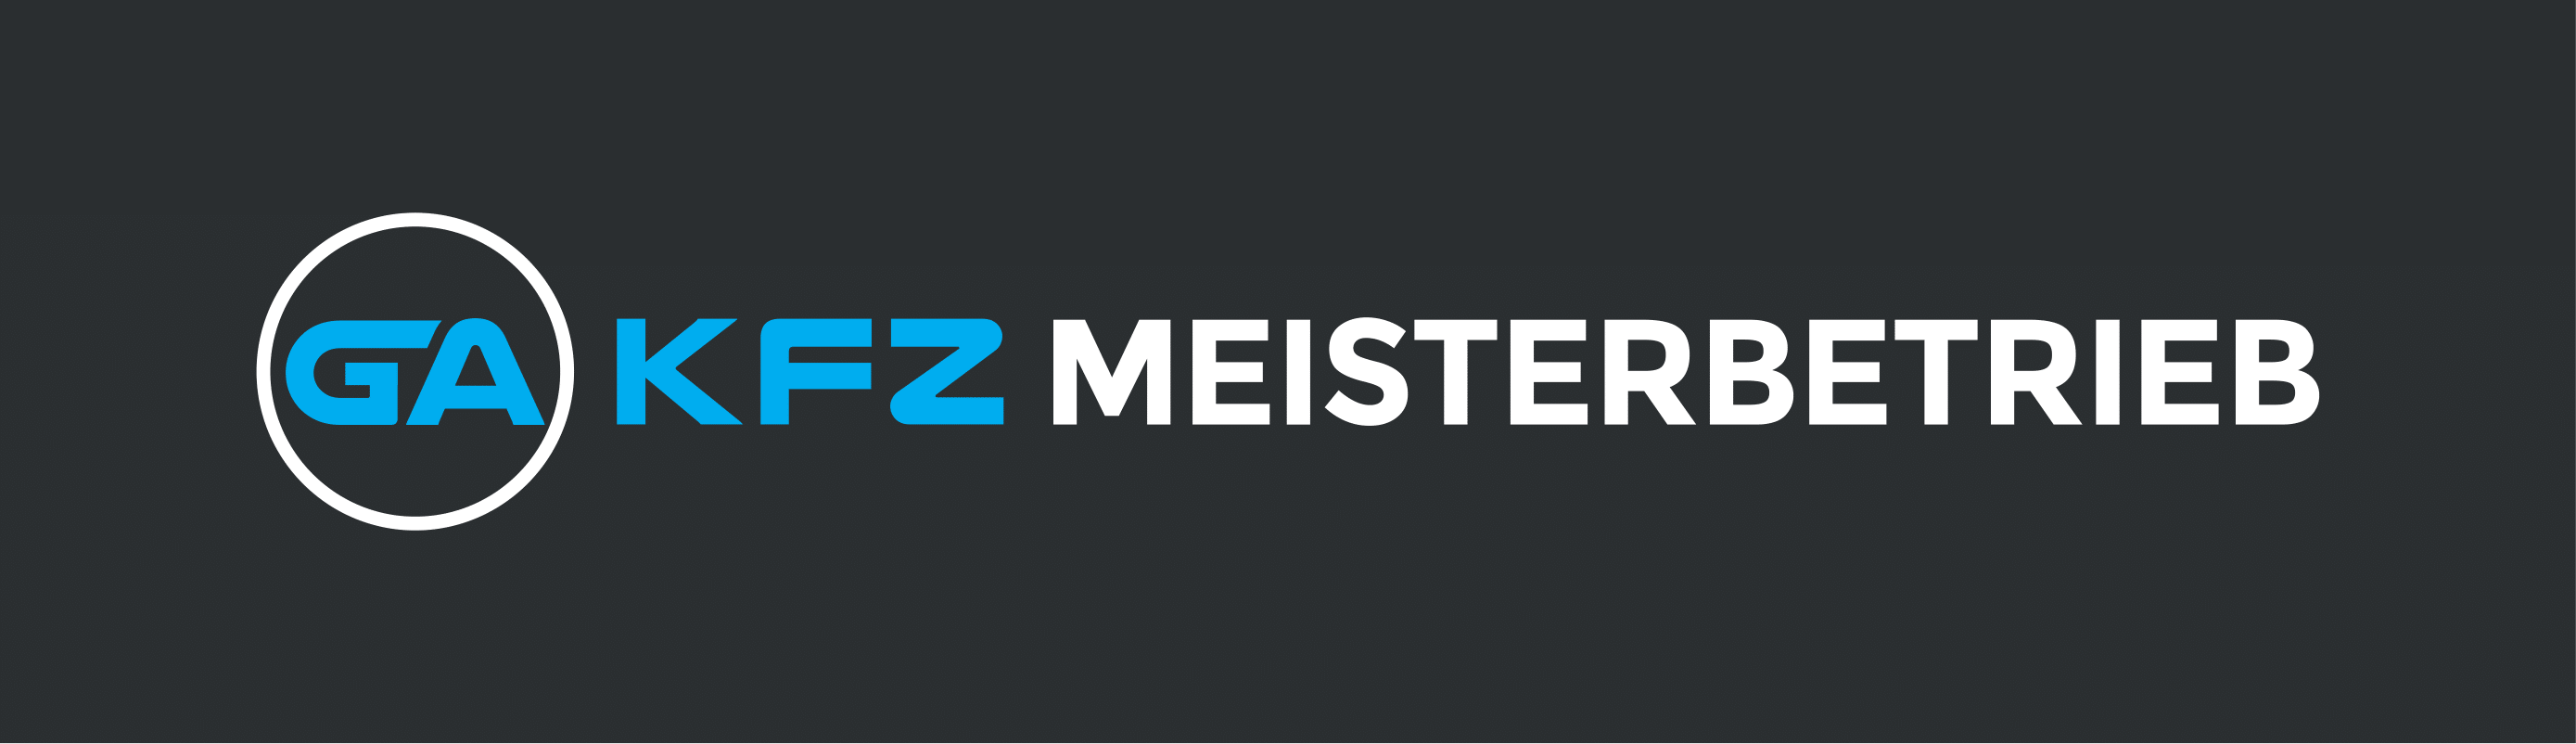 Logo Website- GA KFZ MEISTERBETRIEB-1